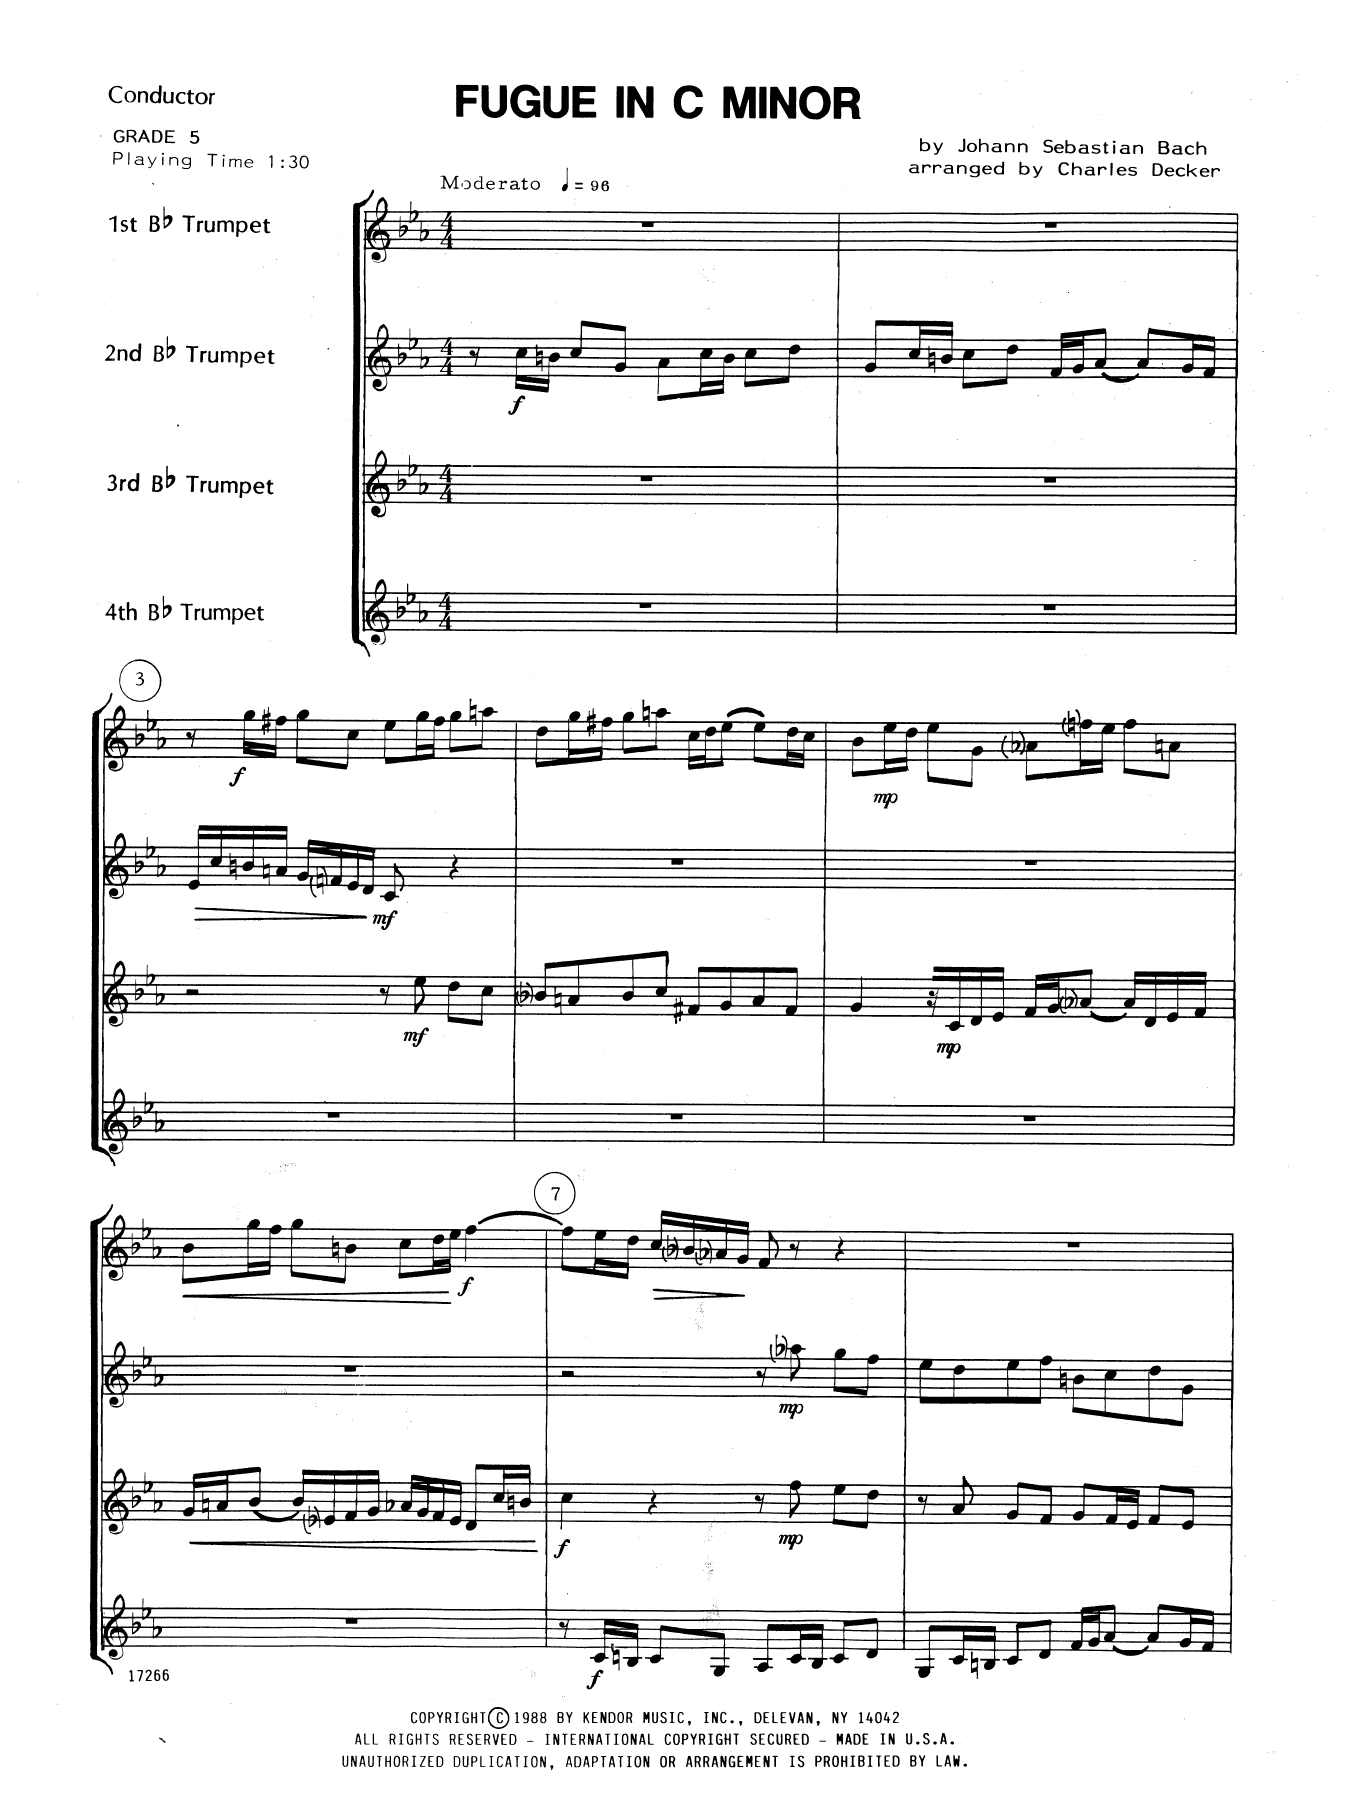 Download Charles Decker Fugue In C Minor - Full Score Sheet Music